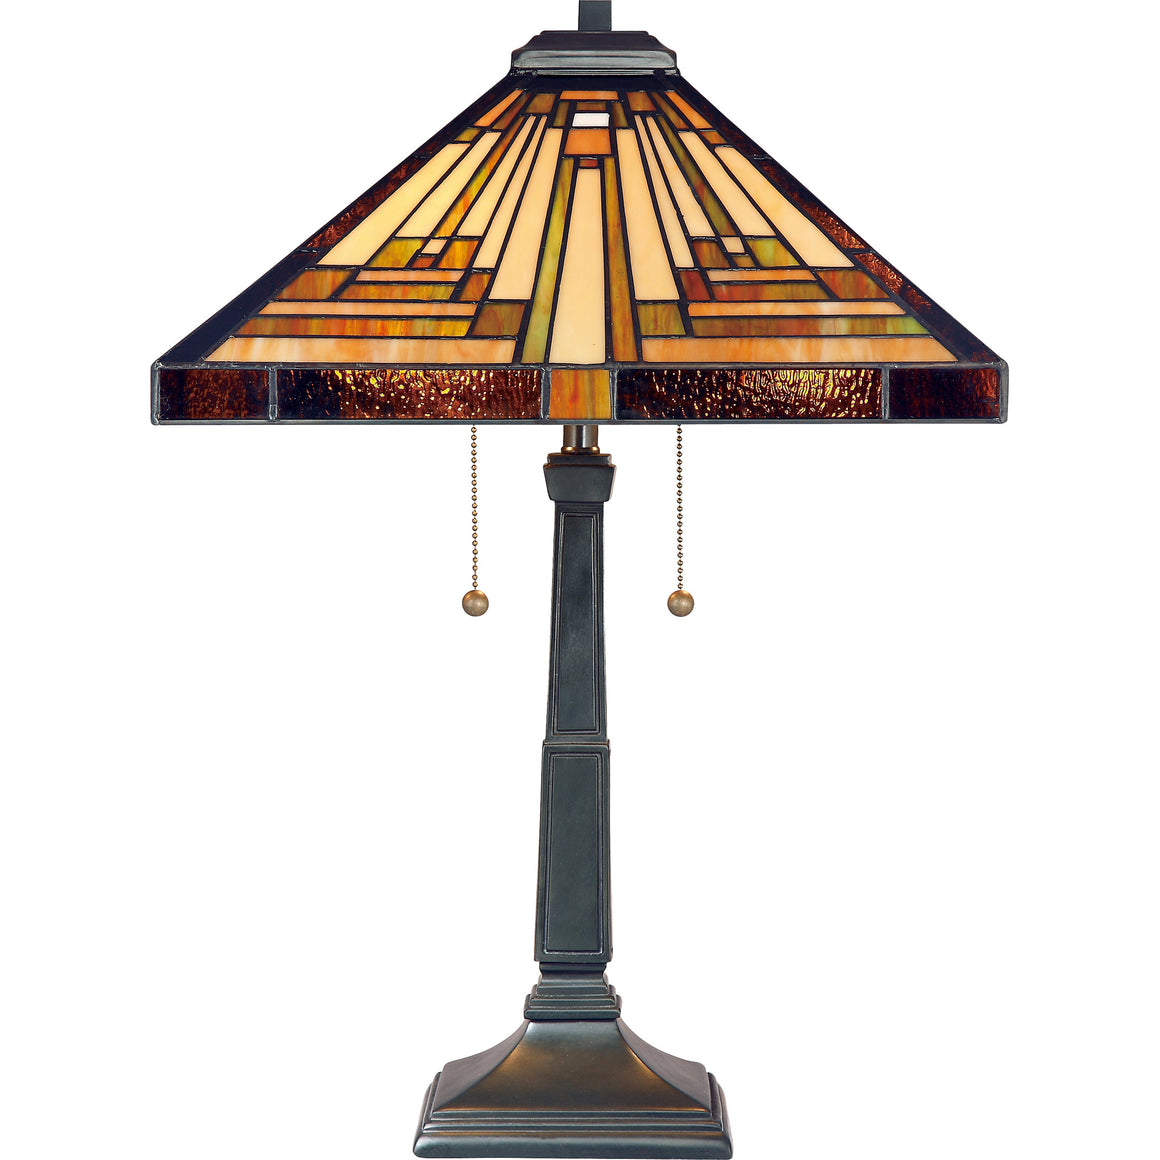 Stephen Tiffany Table Lamp (Quoizel # TF885T)